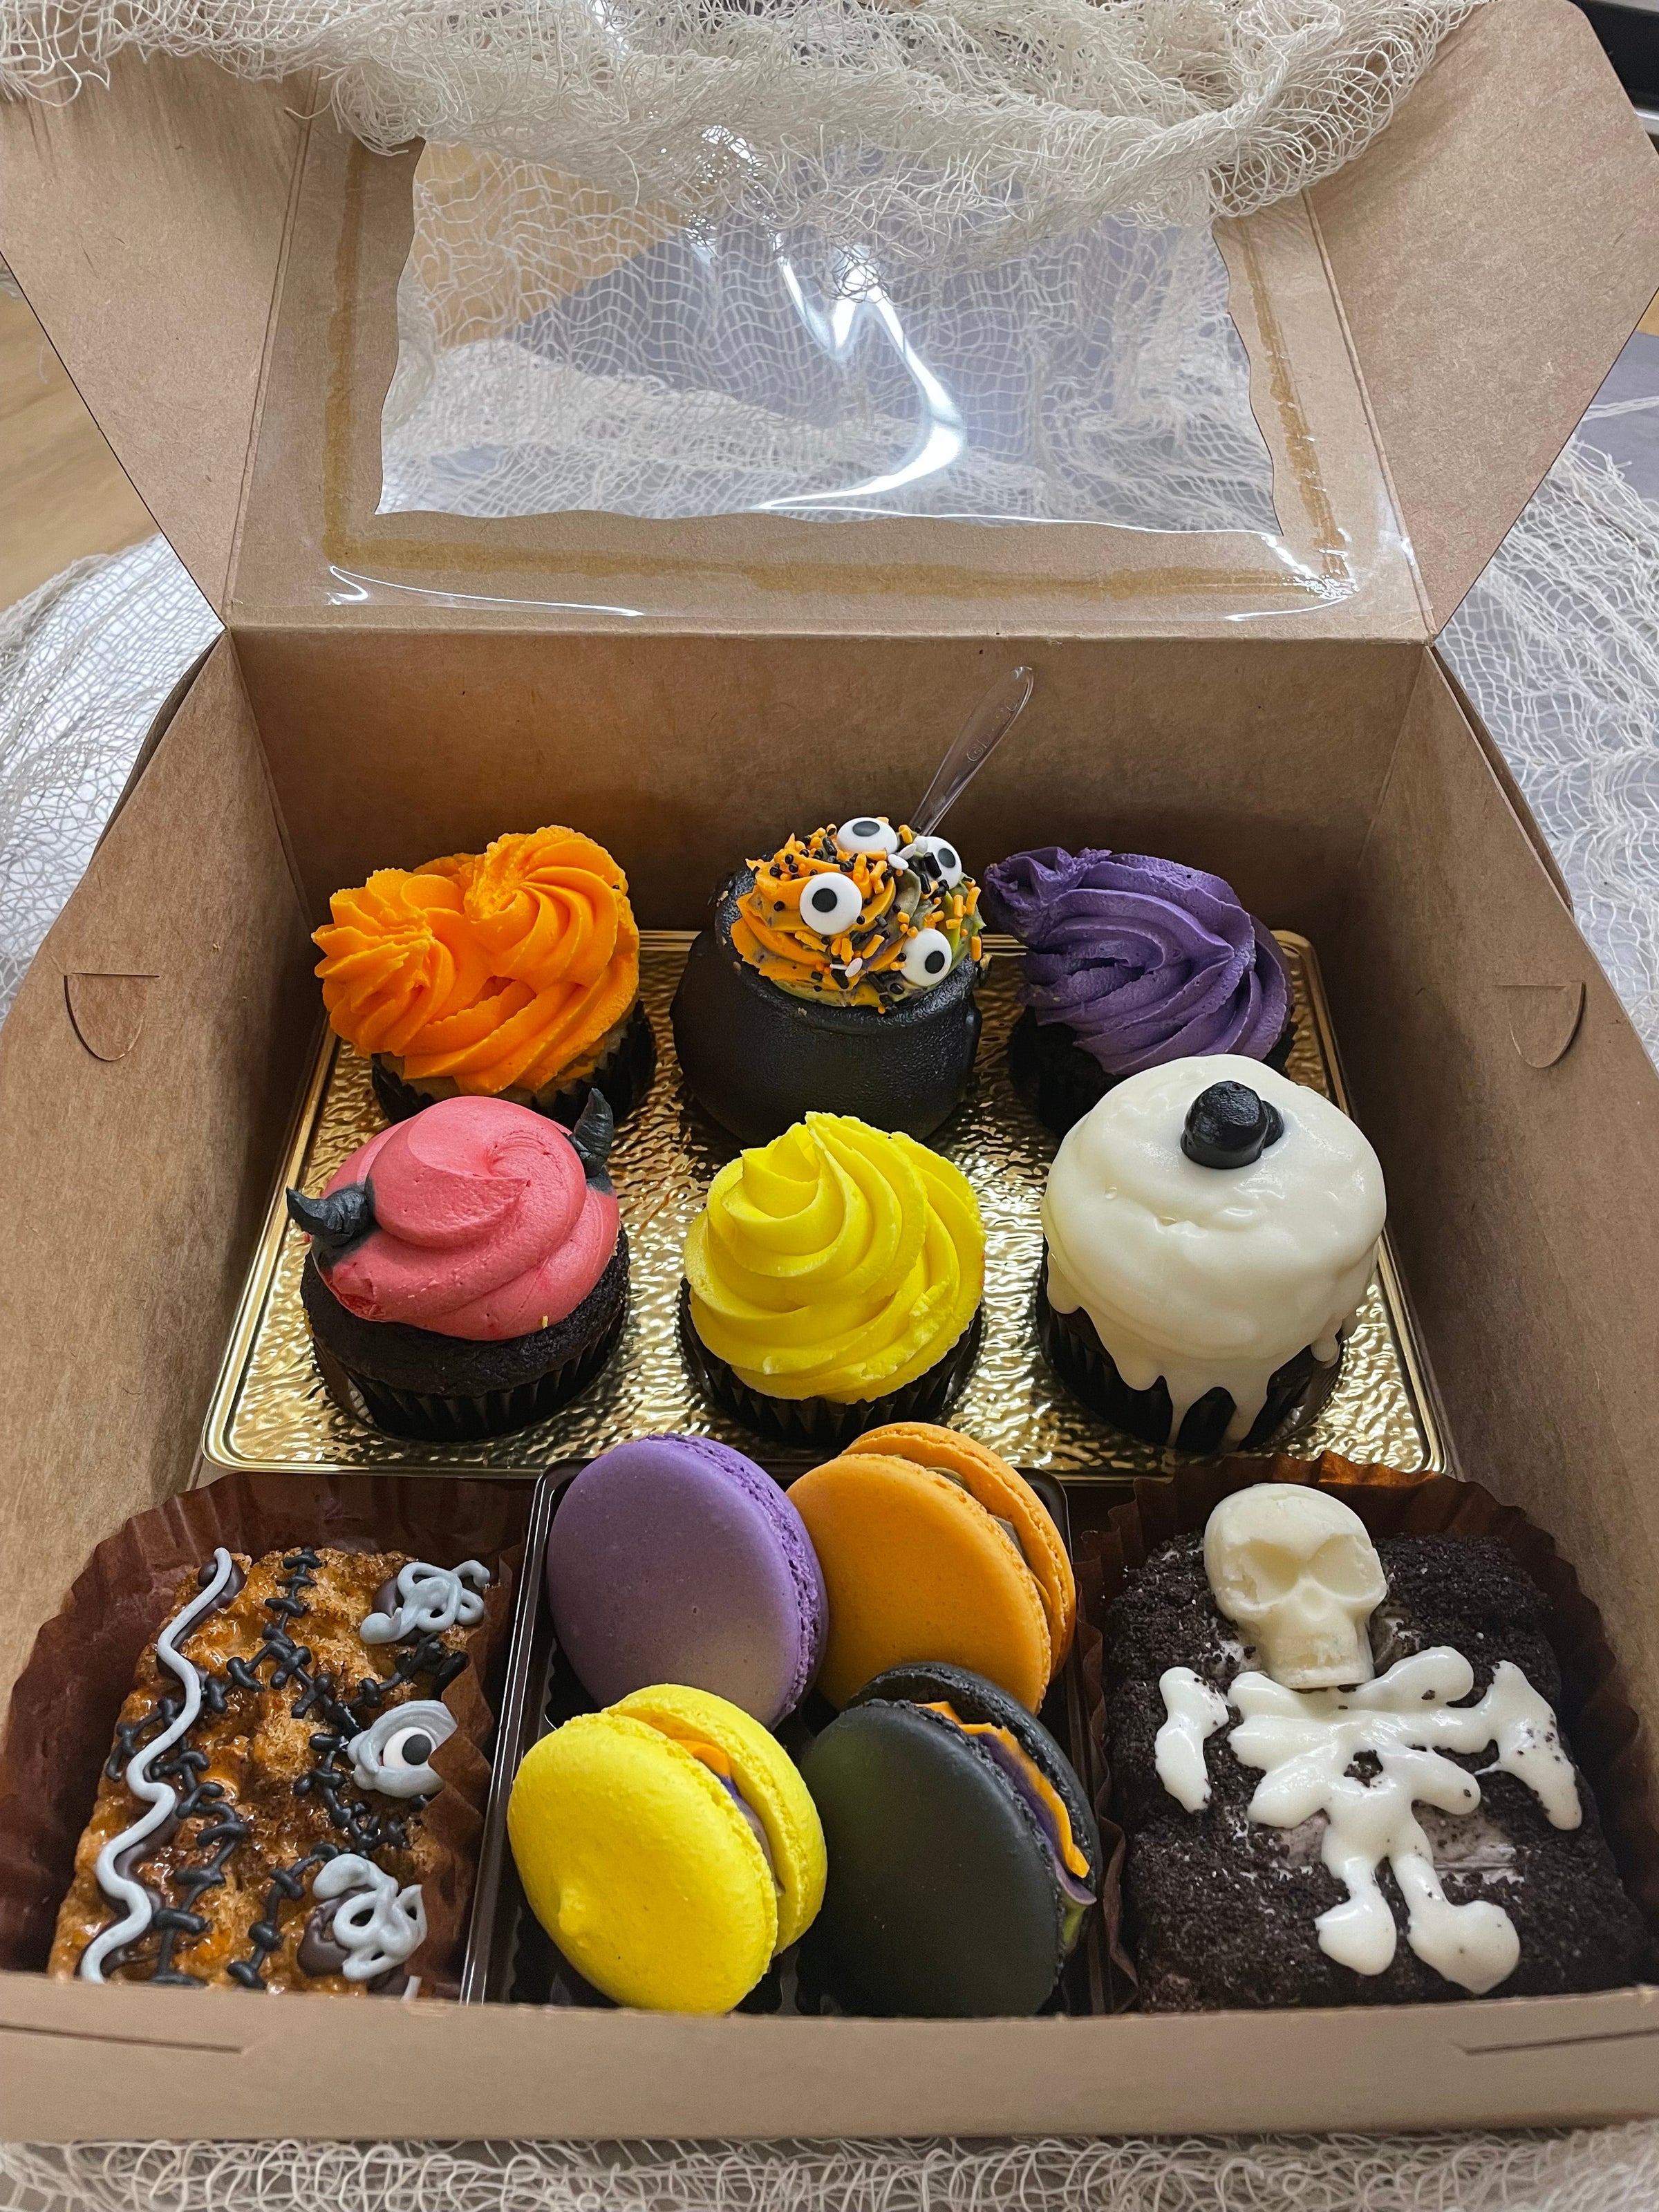 Jenn Cupcakes & Muffins: LV Cake and Cupcakes